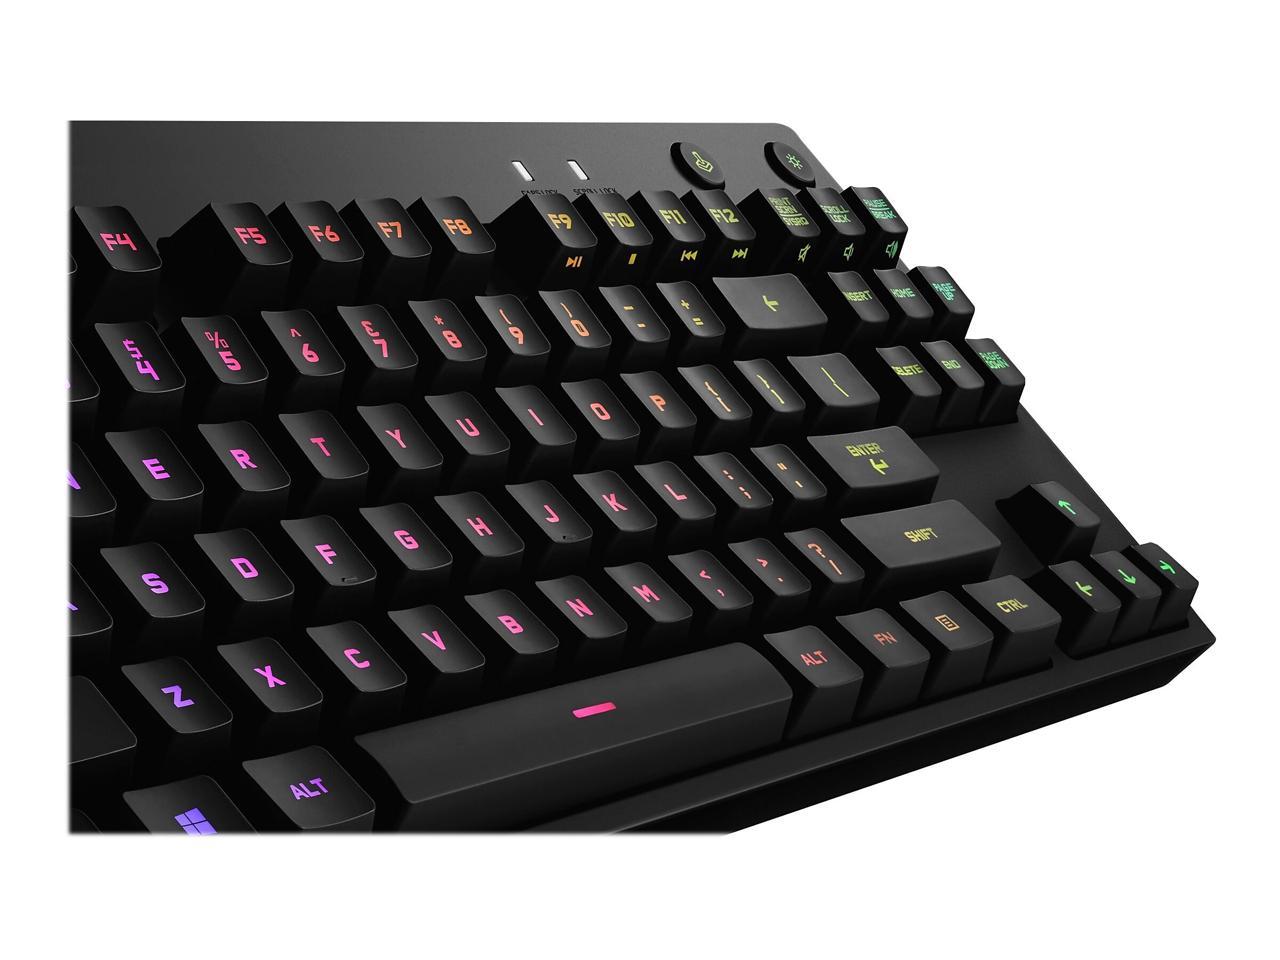 Logitech G PRO Mechanical Gaming Keyboard, Ultra Portable Tenkeyless  Design, Detachable Micro USB Cable, 16.8 Million Color LIGHTSYNC RGB  Backlit Keys